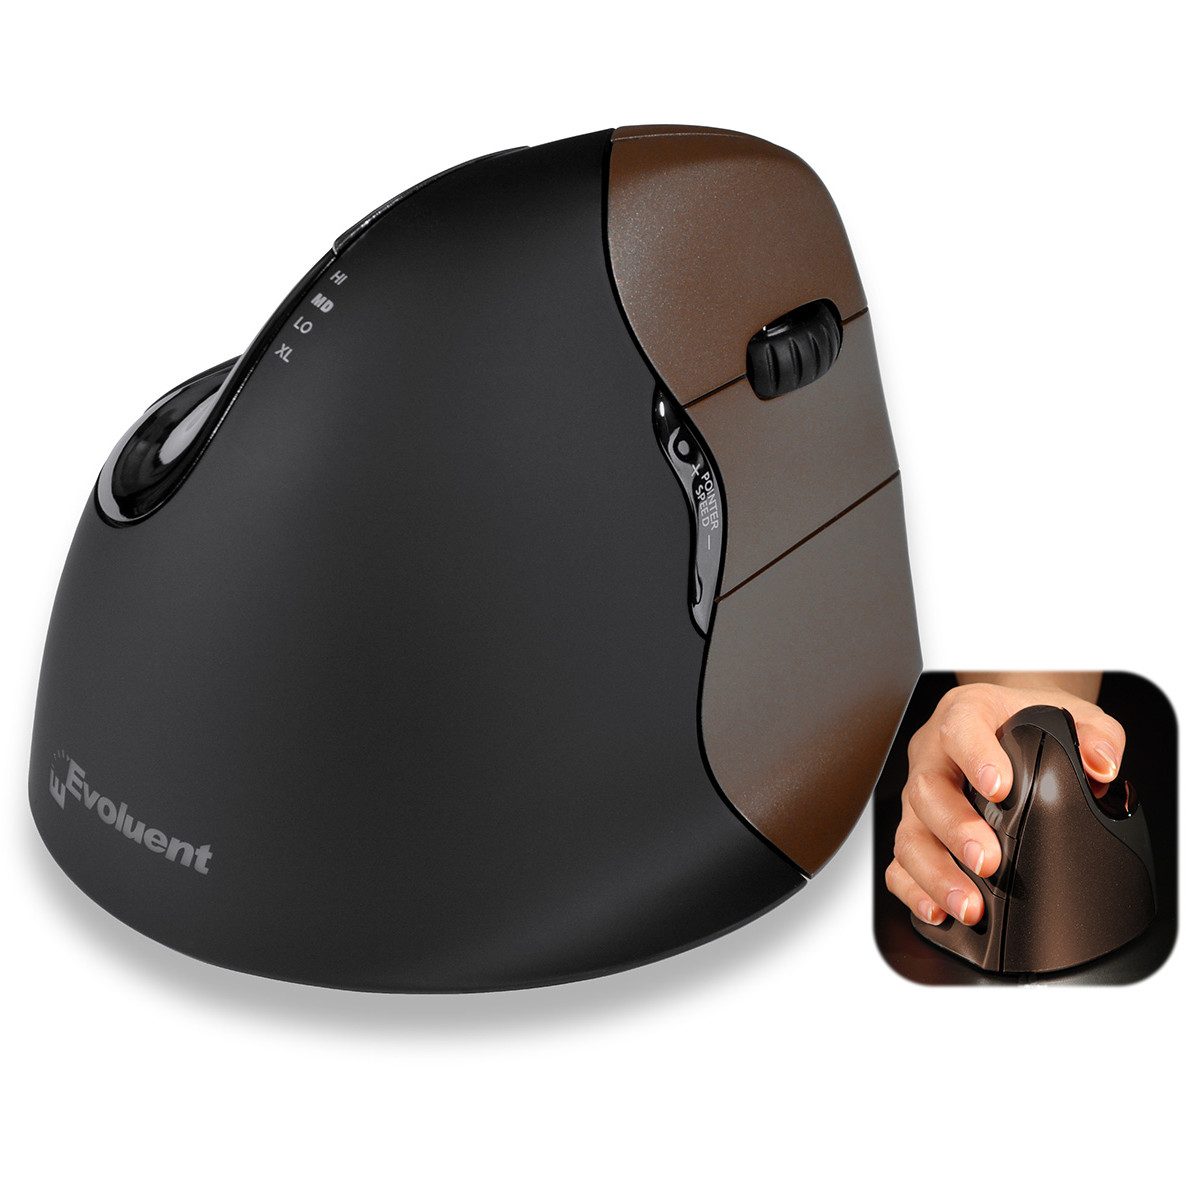 Mouse Vertical Mouse 4 Small, wireless, pentru mana dreapta